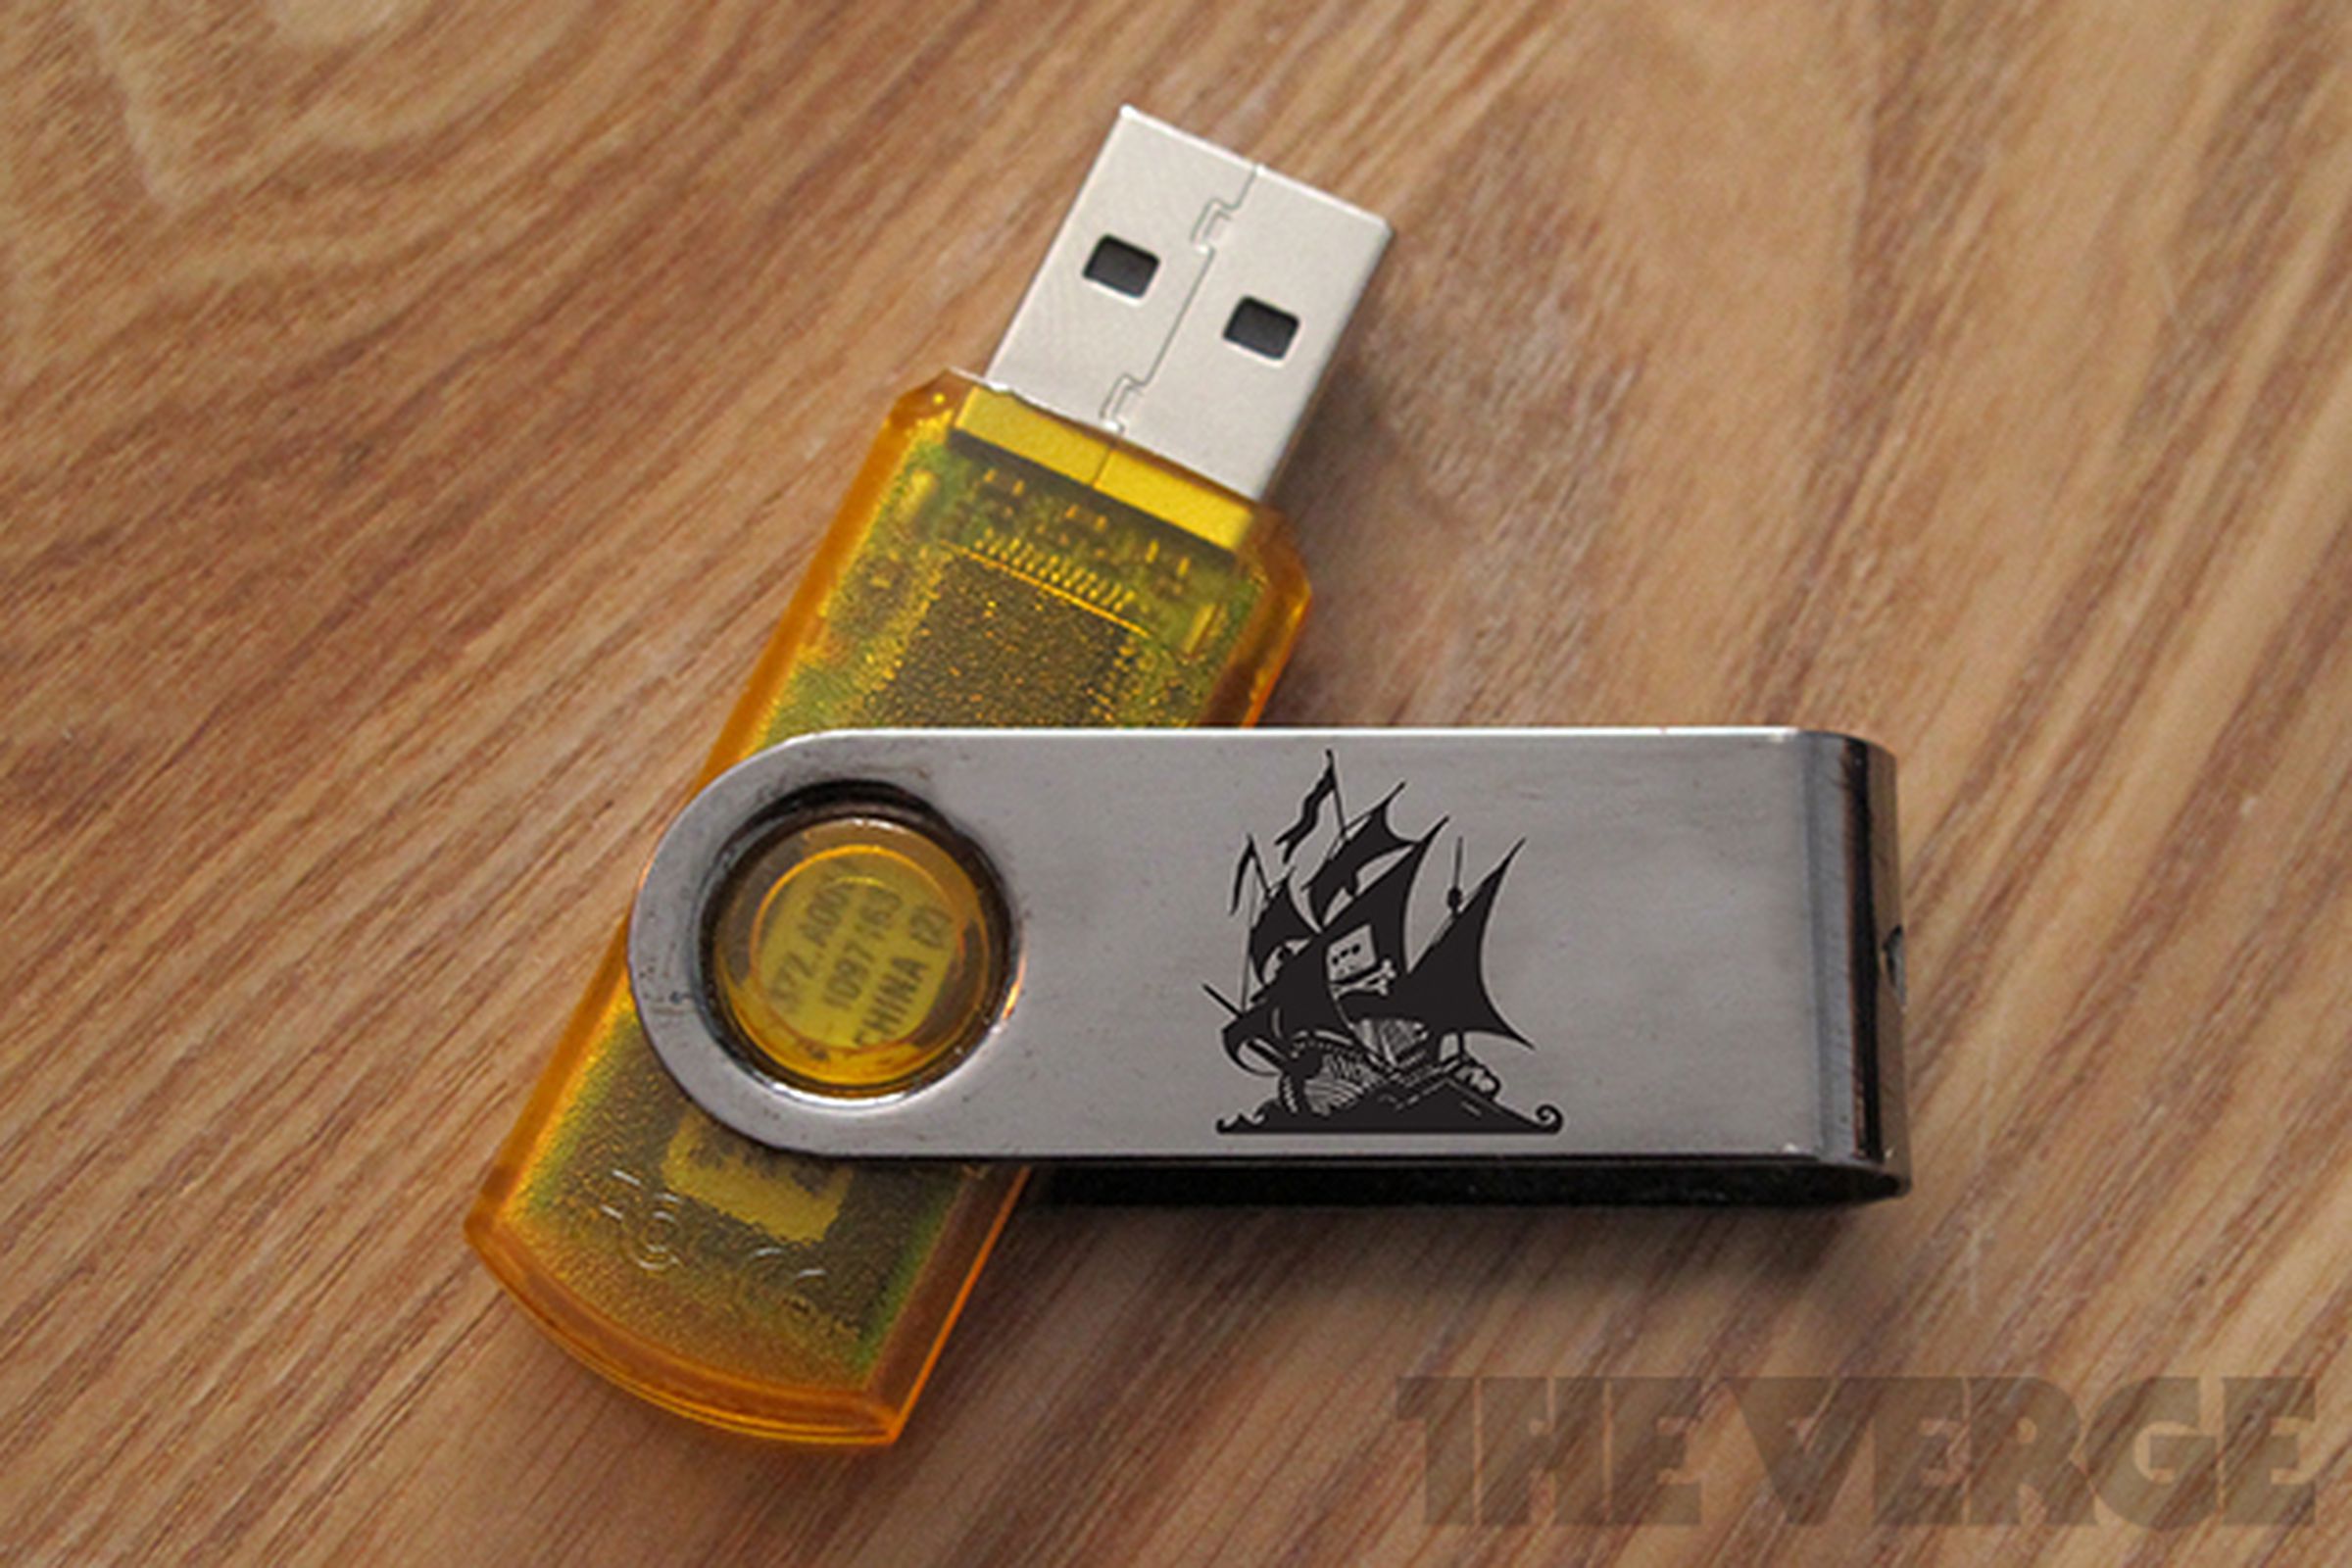 The Pirate Bay USB Key